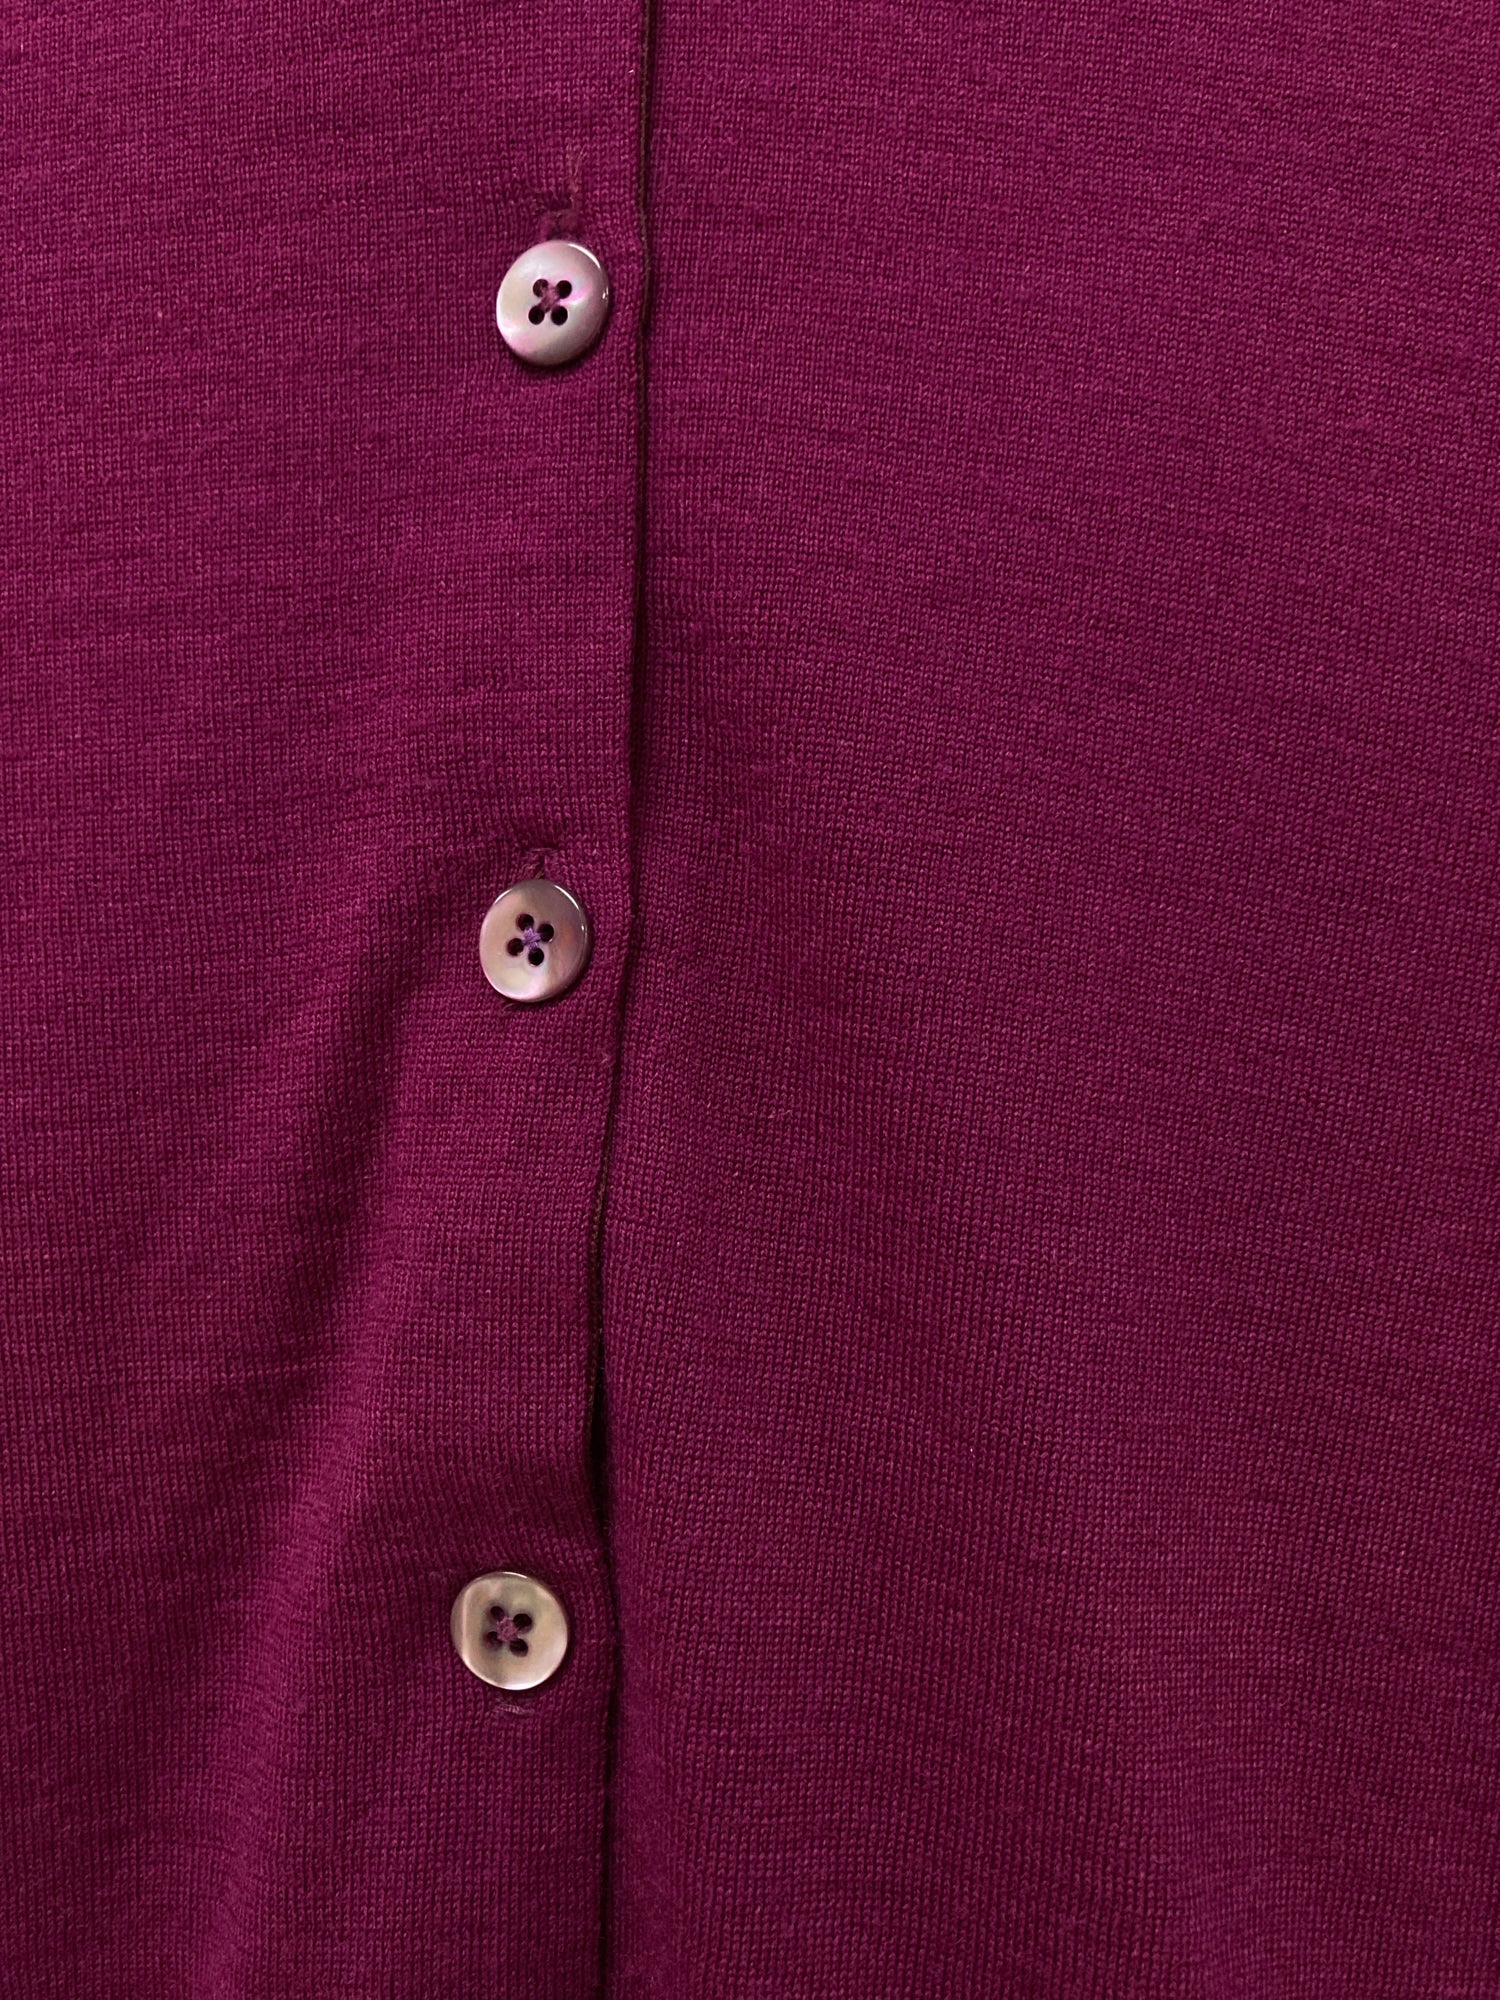 John Smedley pinkish-purple wool knit point collar cardigan - womens XS S